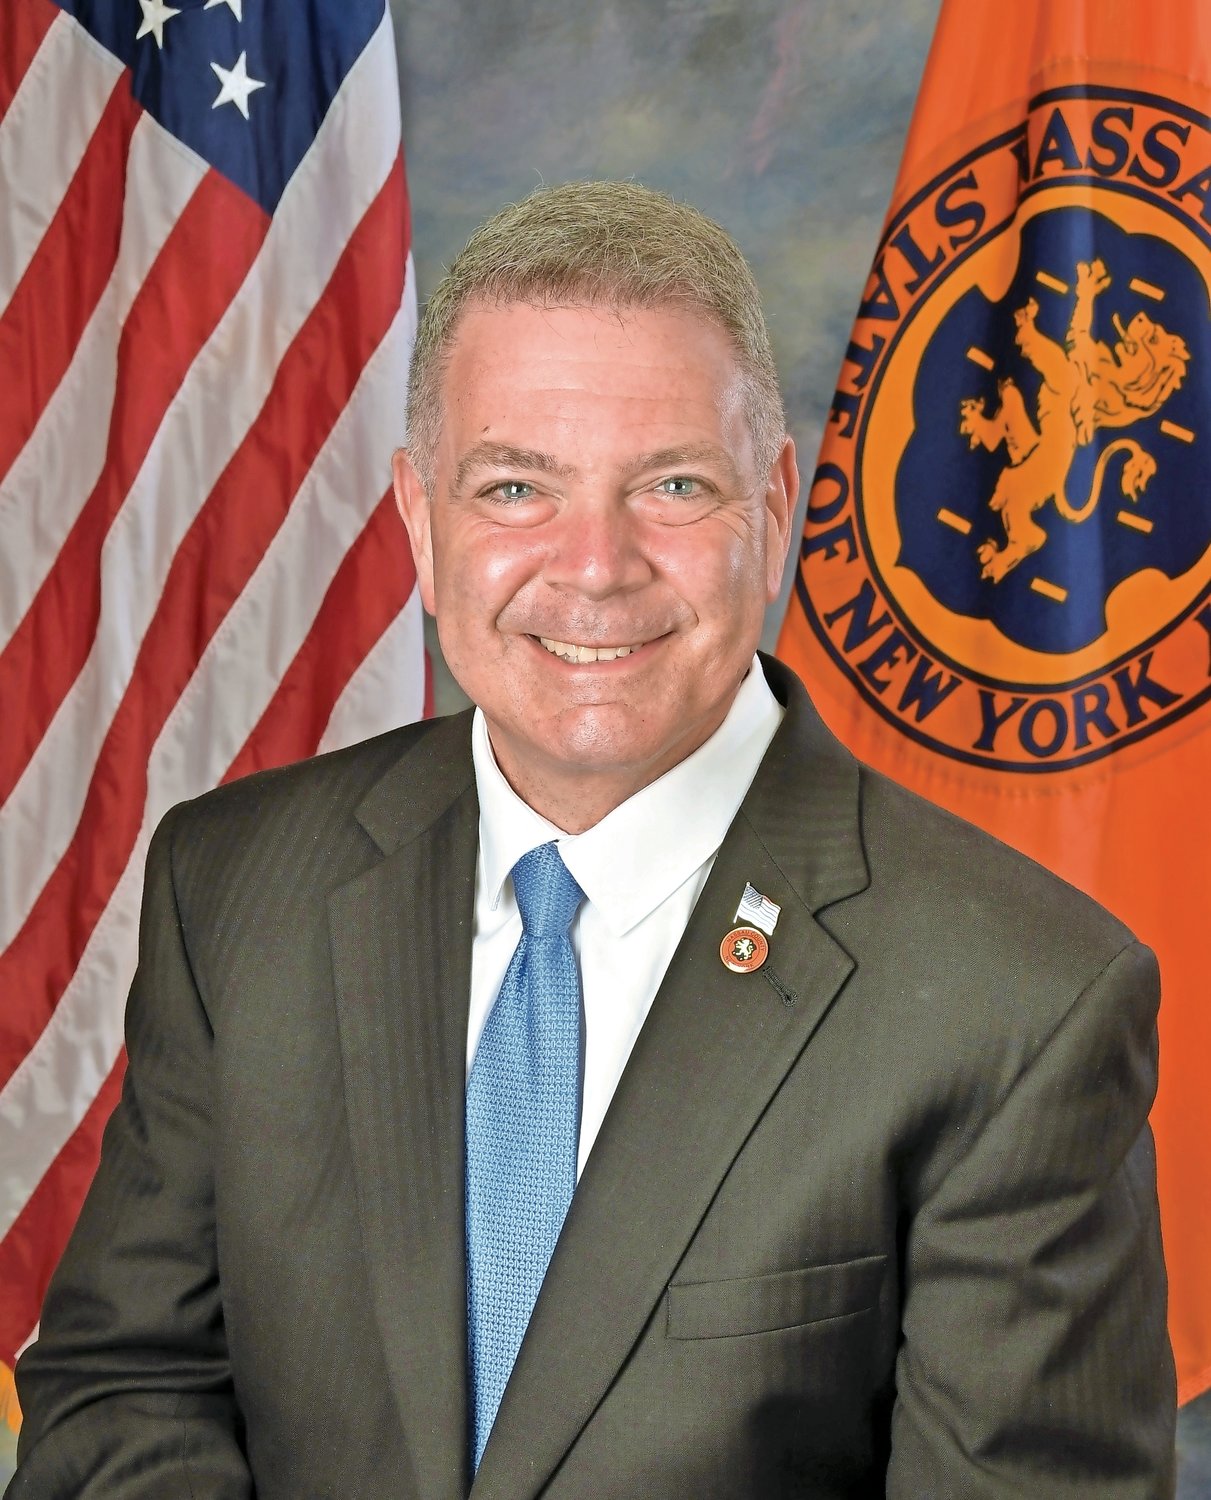 The Herald endorses Steve Rhoads for Nassau County's 19th Legislative District.